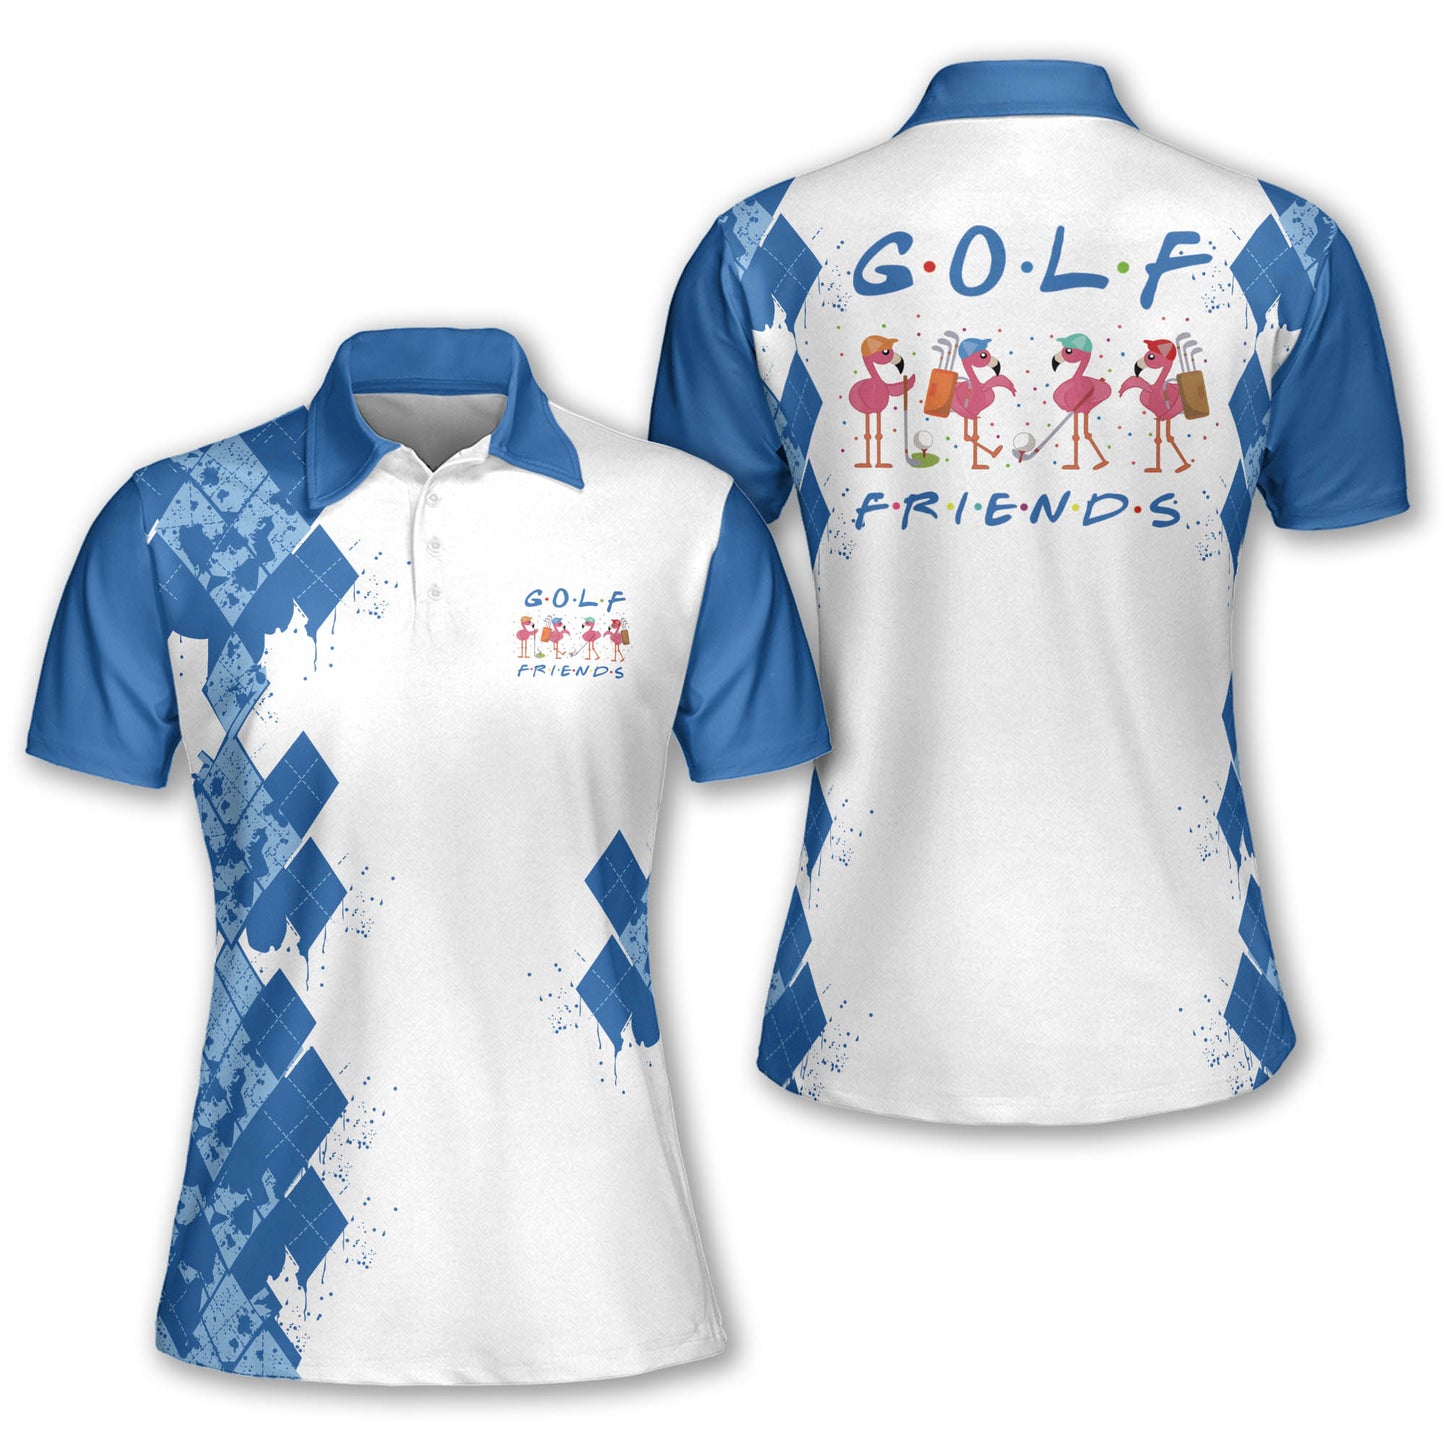 Golf Friends Flamingo Muticolor Shirts I0272